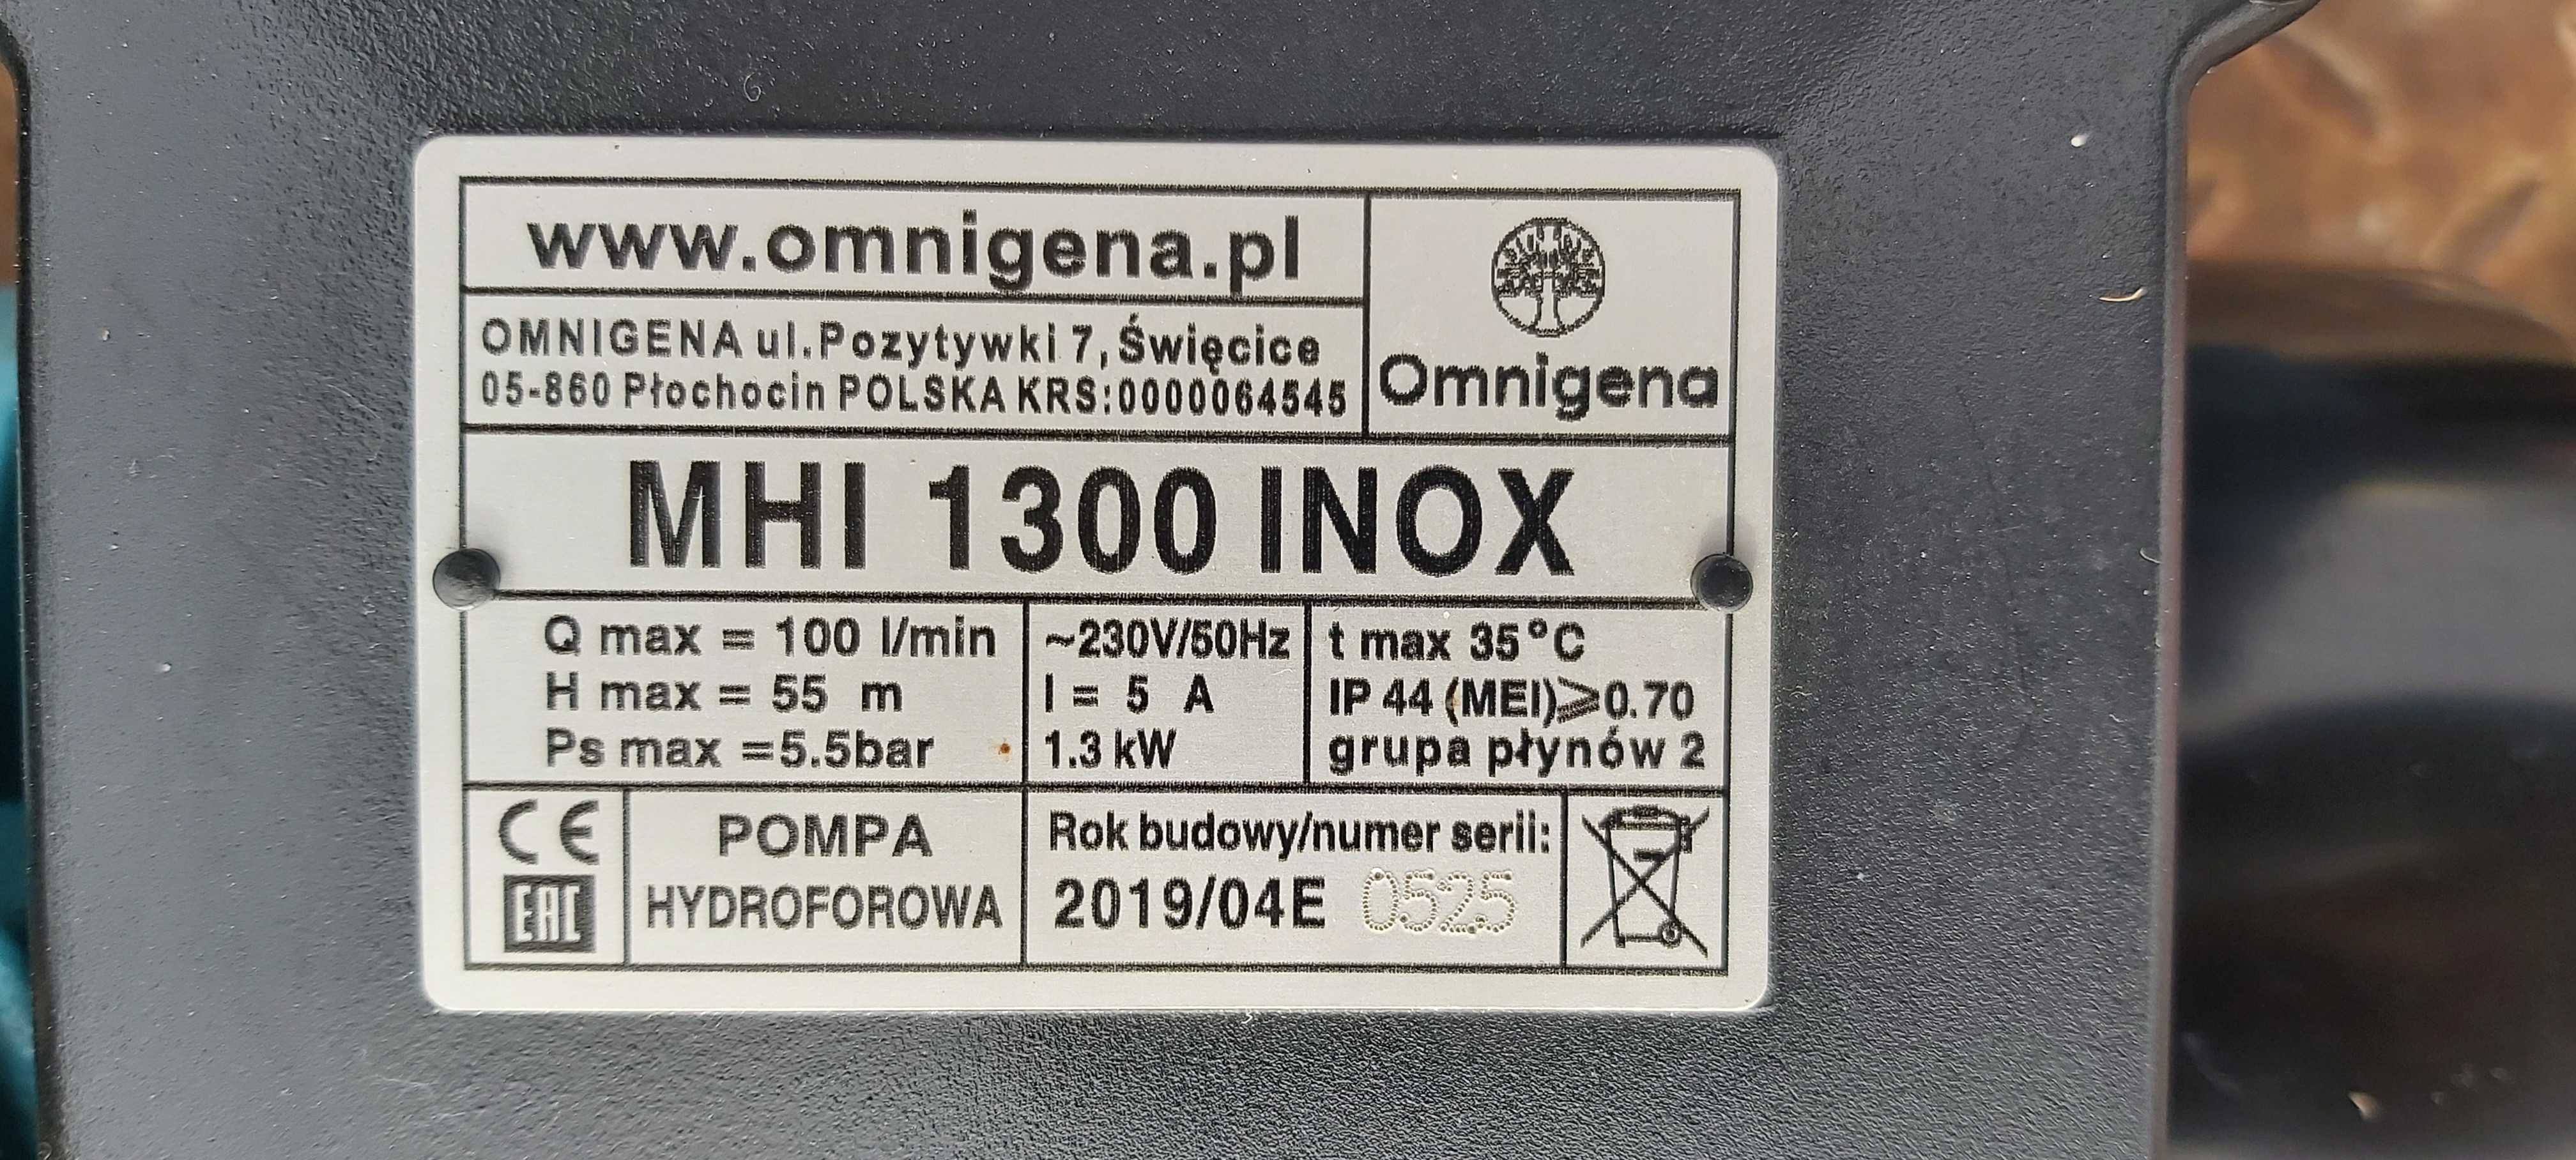 Bomba hidrófora MHI 1300 INOX 230V OMNIGENA